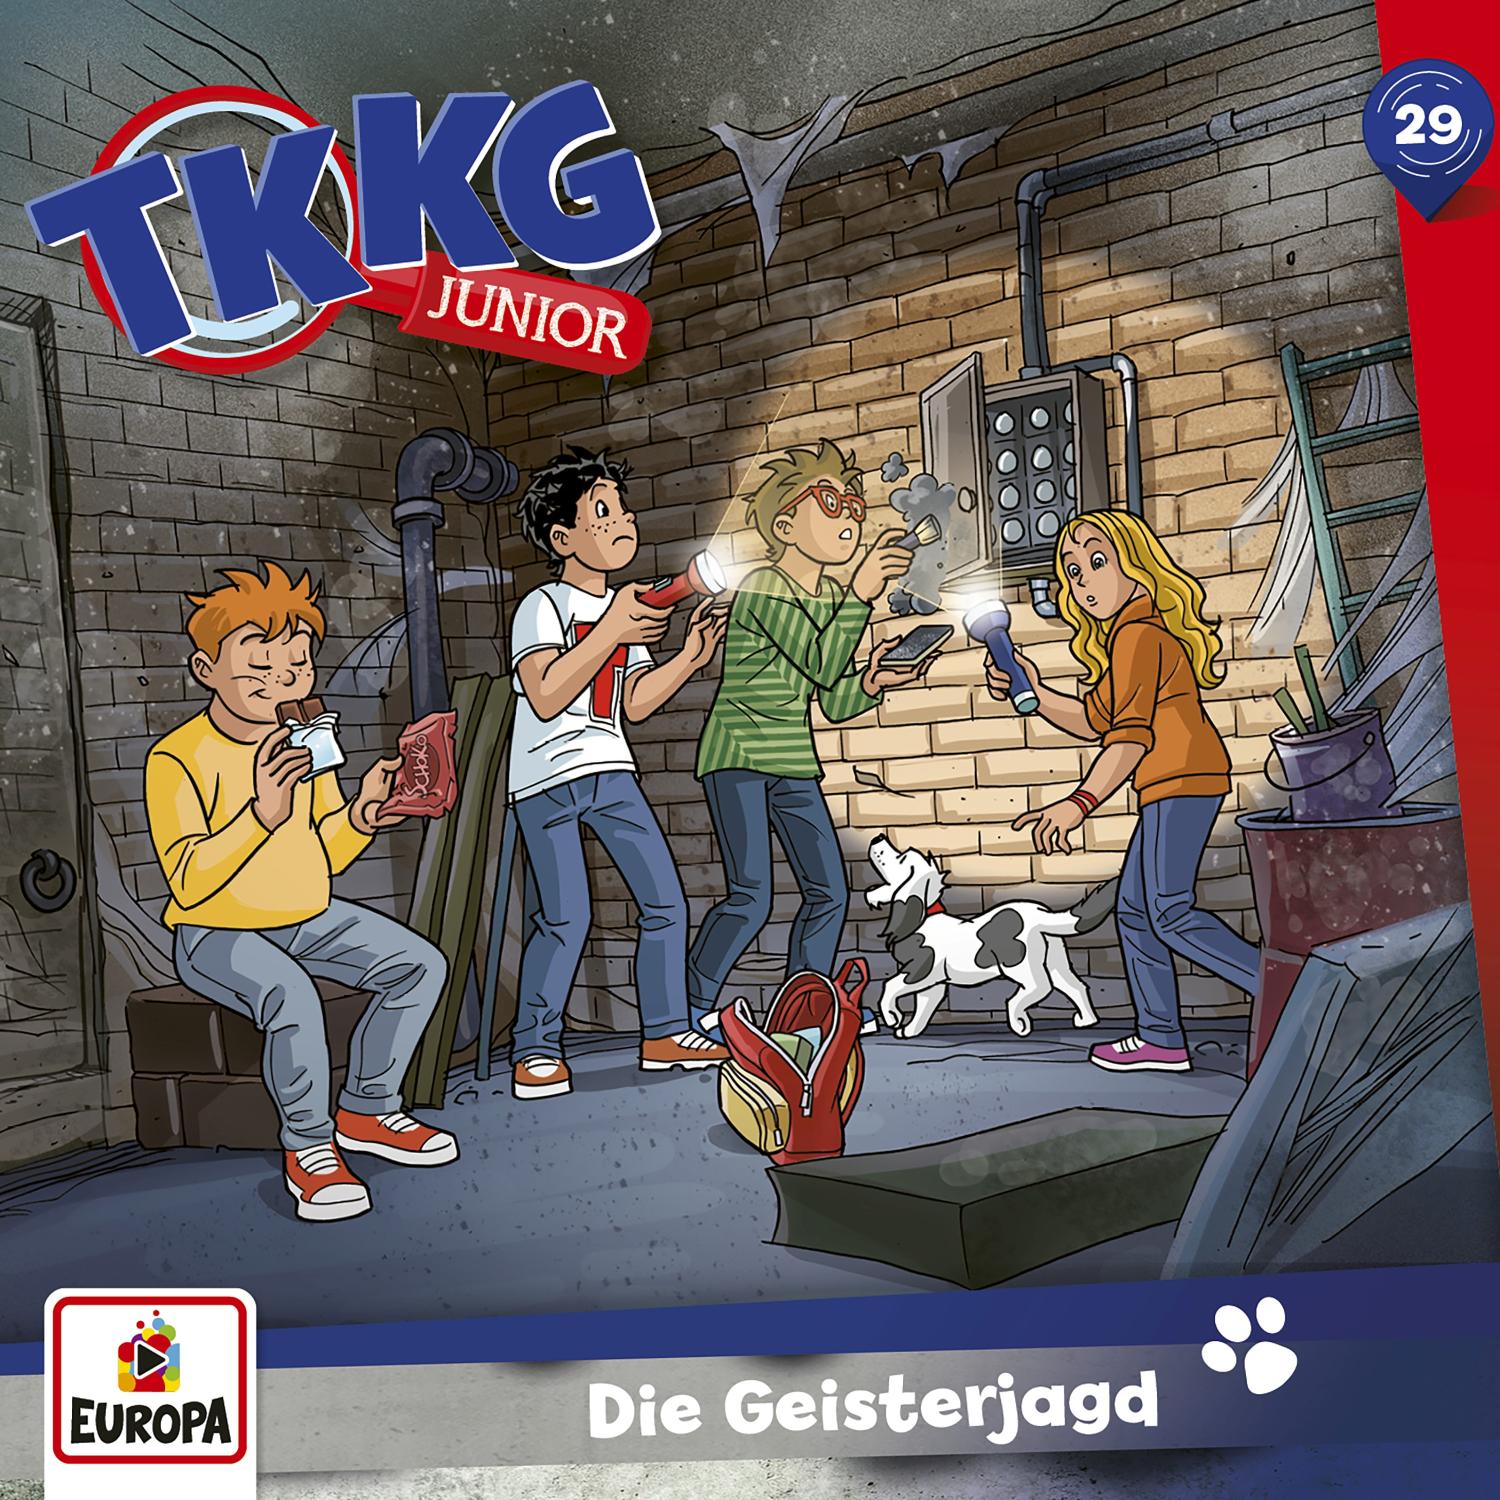 TKKG Junior Hörspiel-Folge 29: Die Geisterjagd